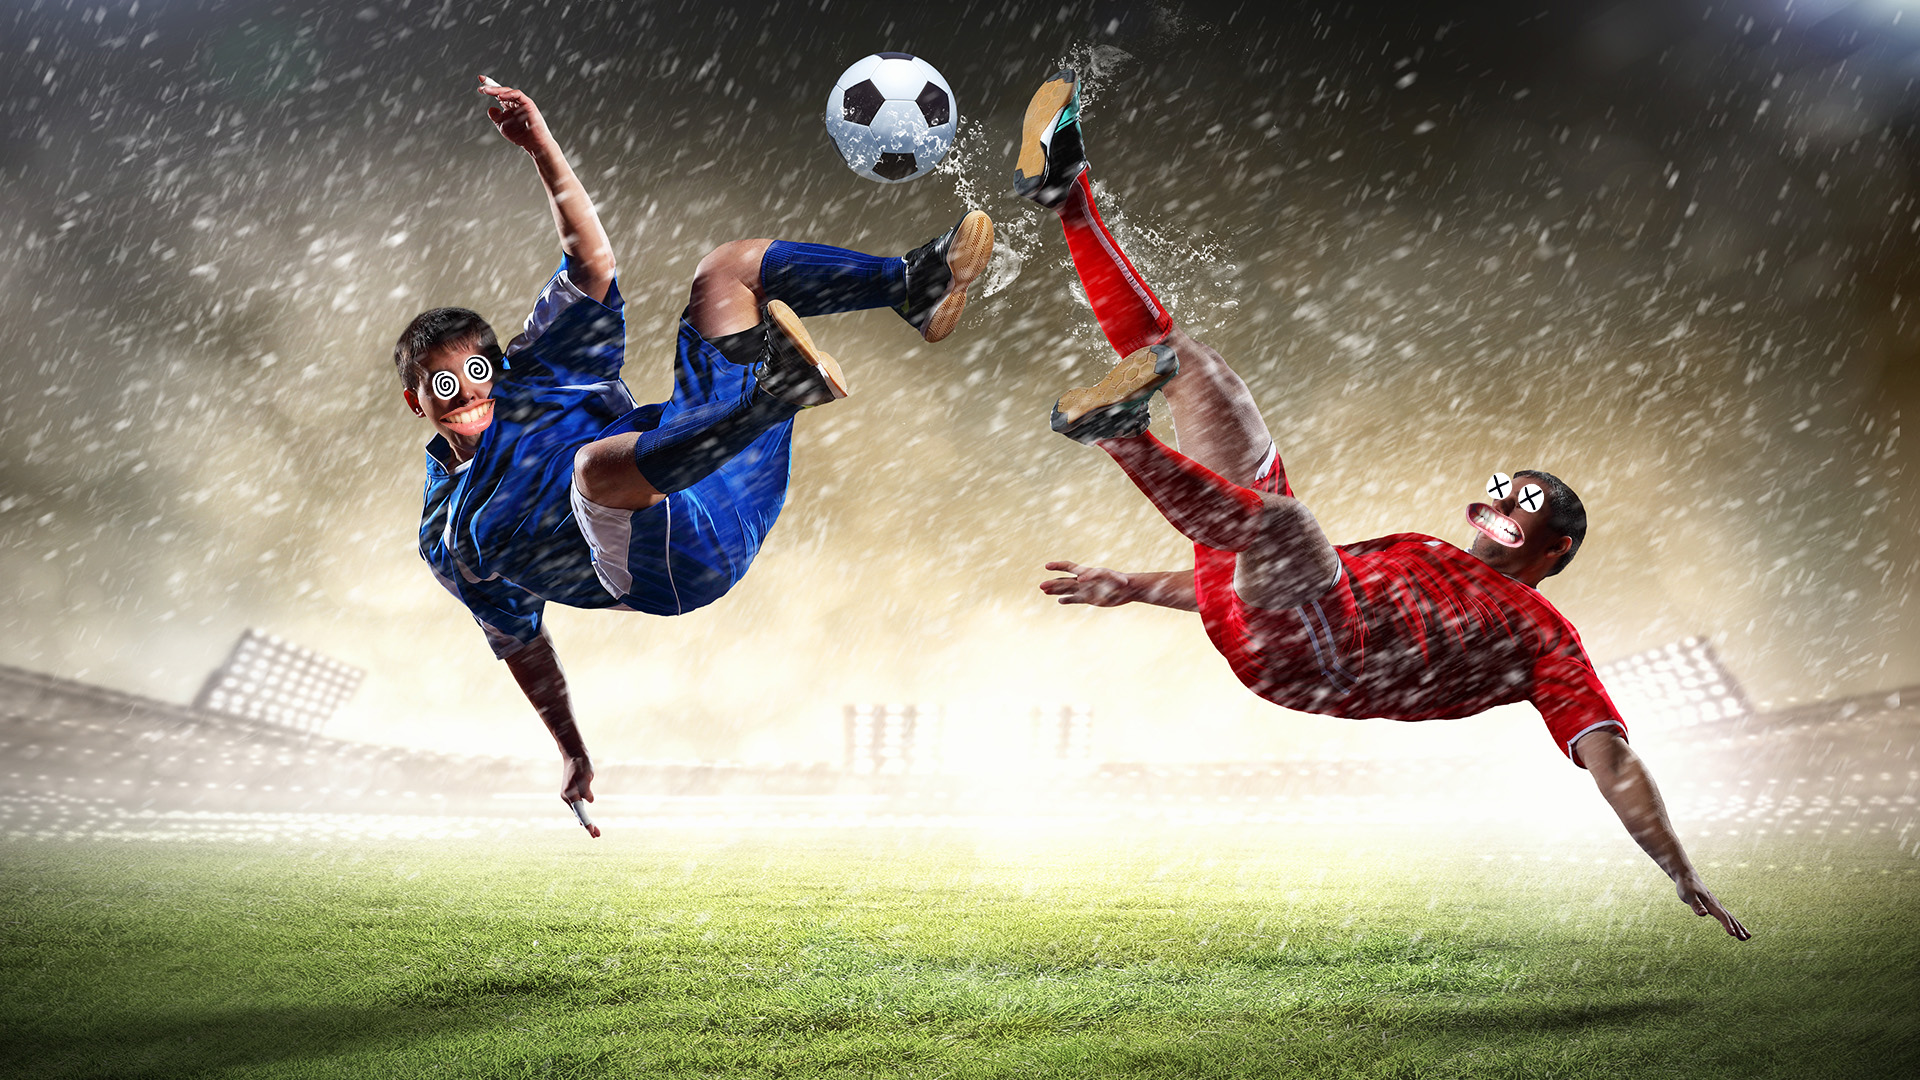 Football match in the rain